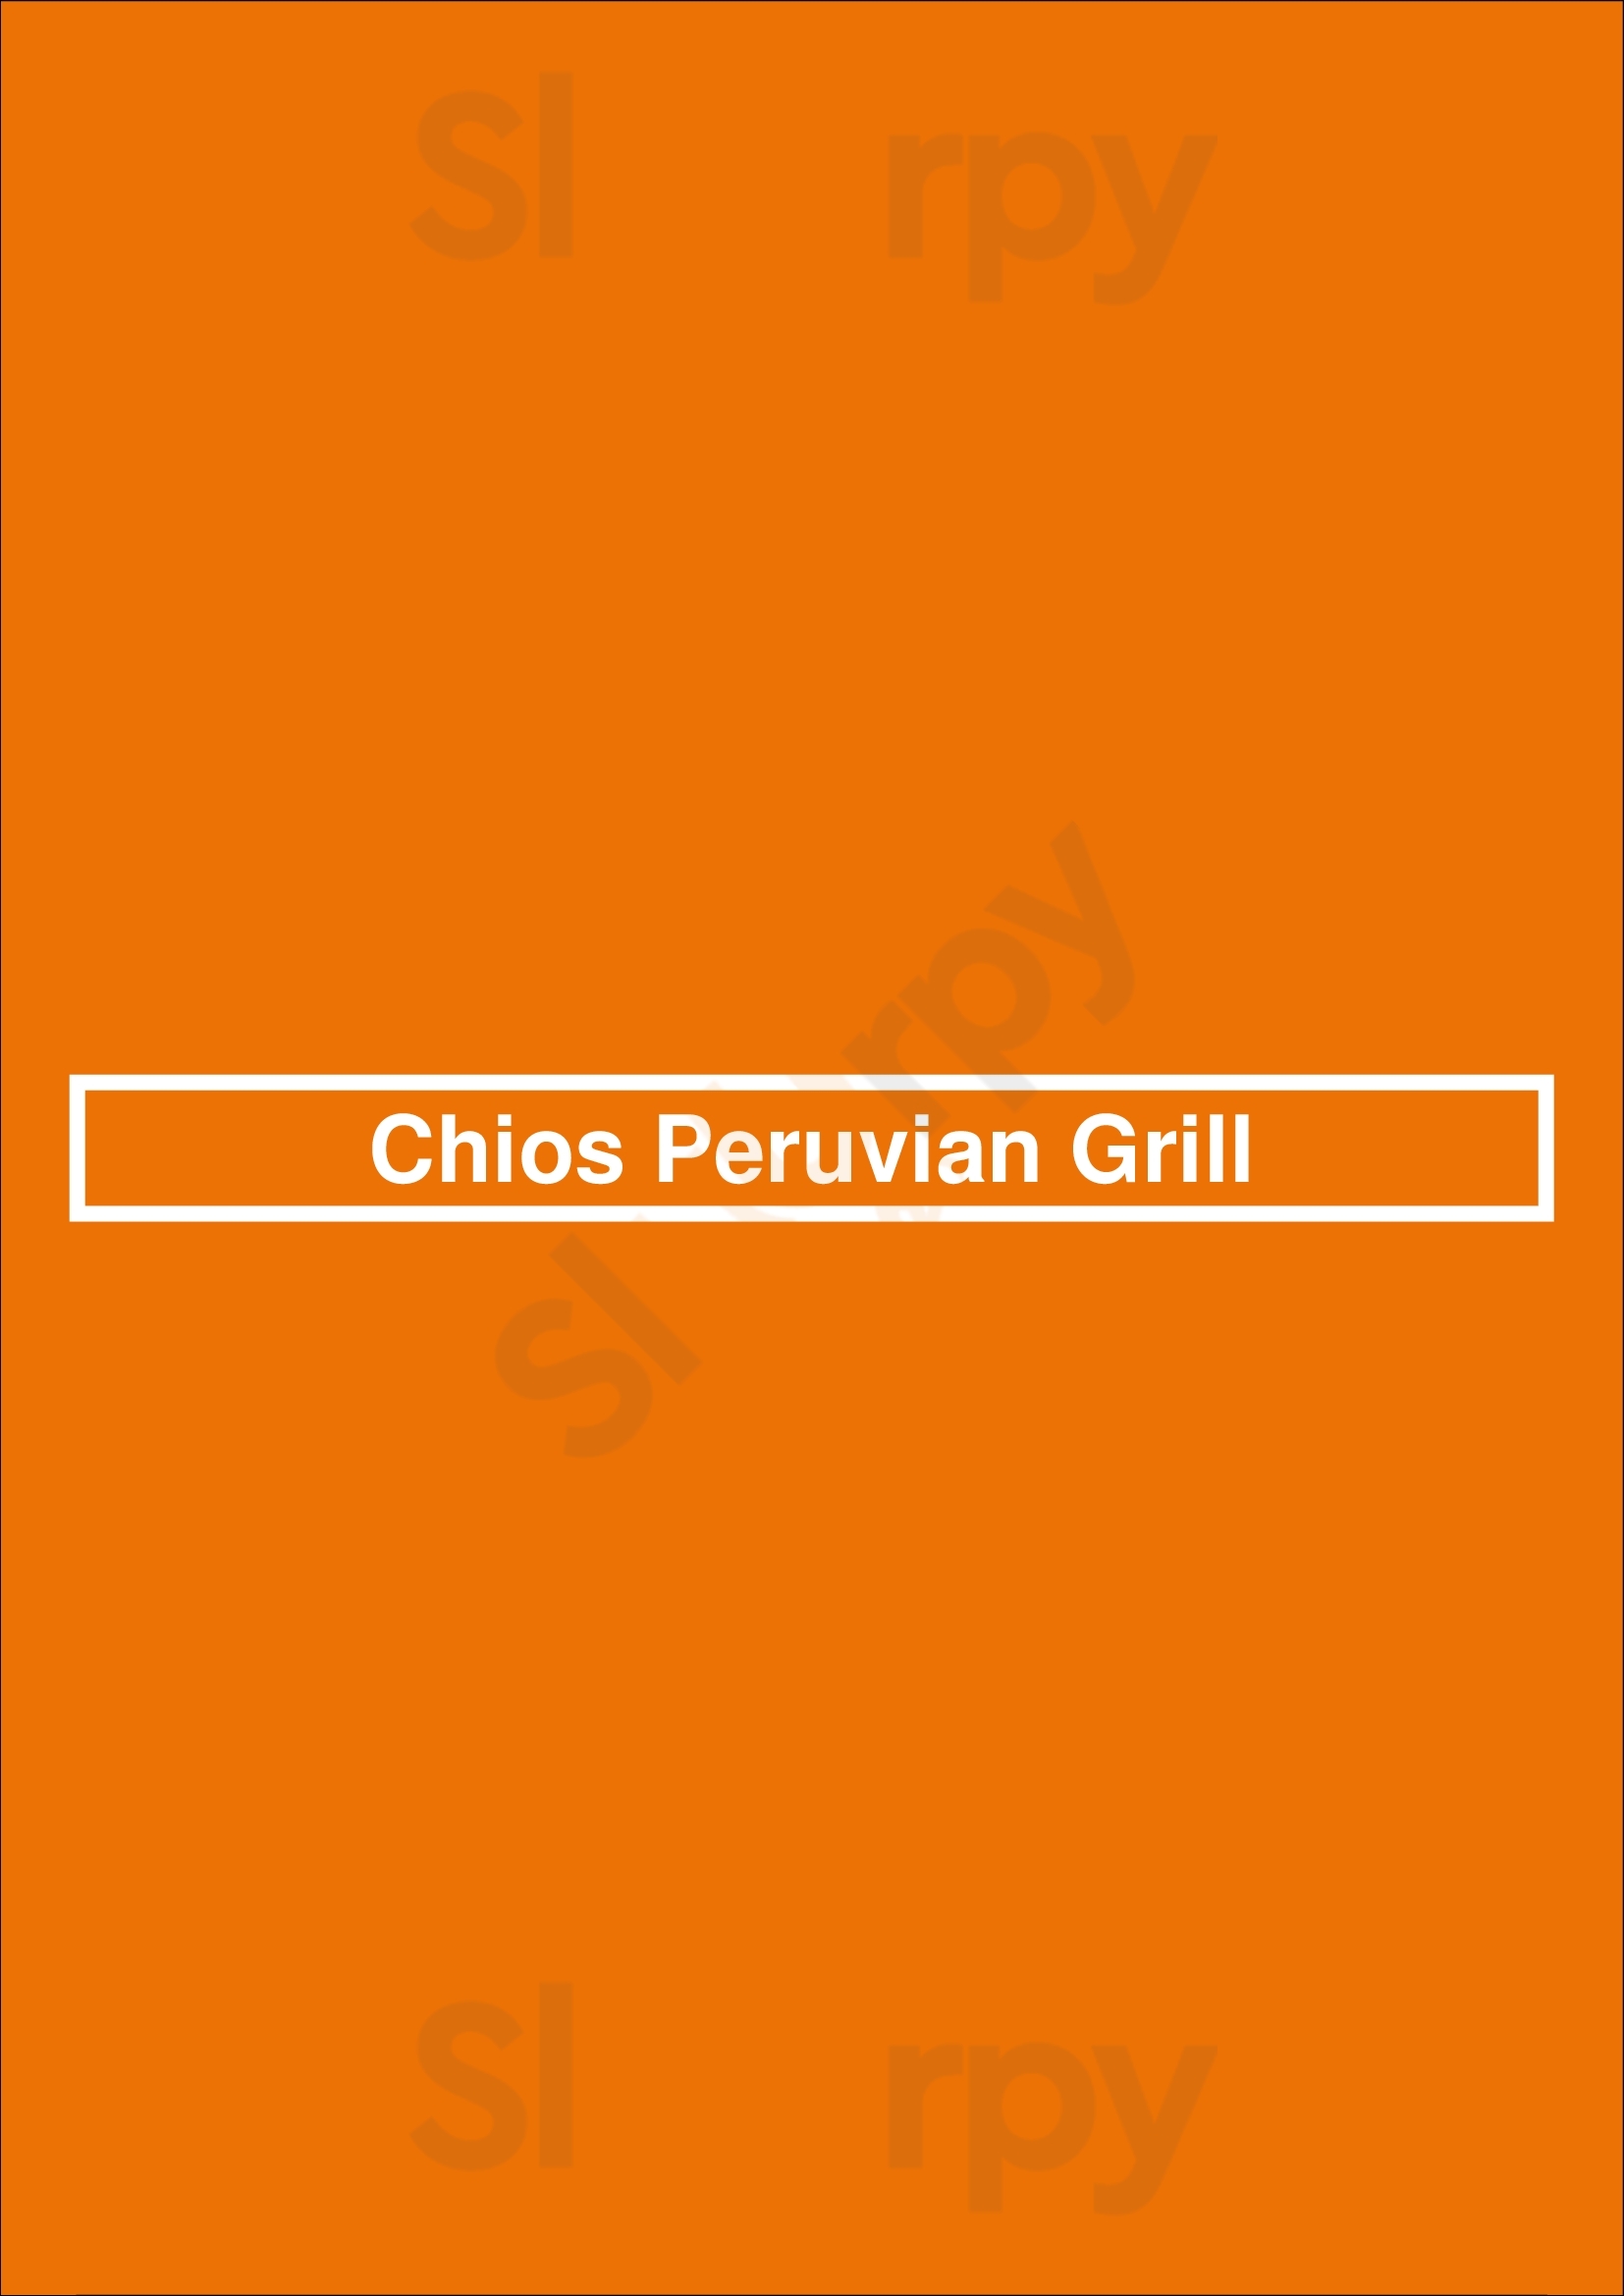 Chios Peruvian Grill Los Angeles Menu - 1